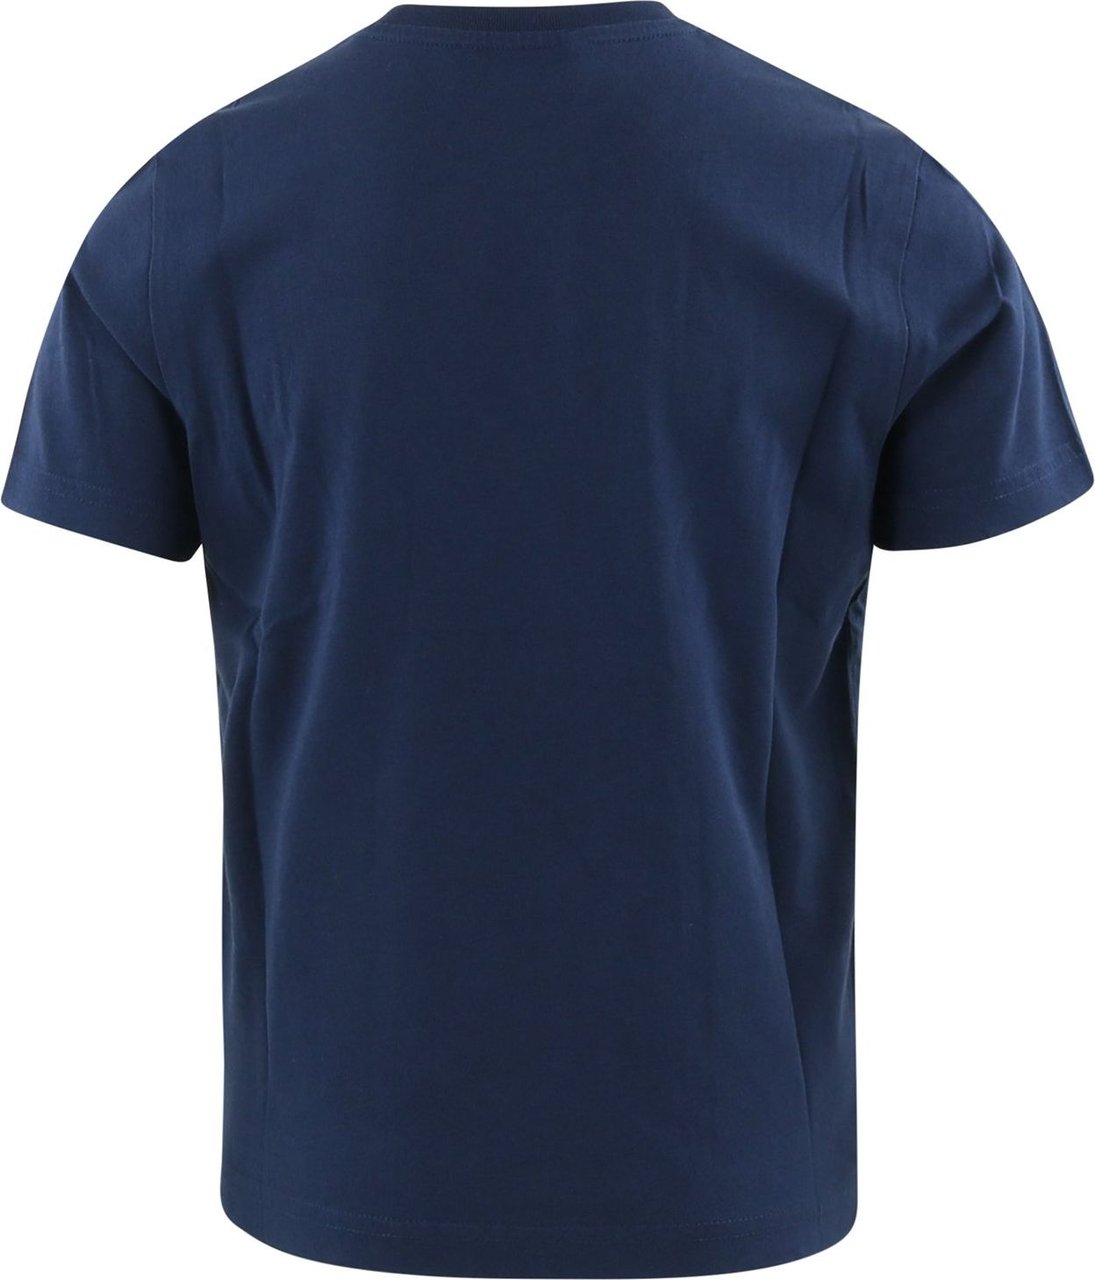 Dsquared2 T-Shirts Blauw